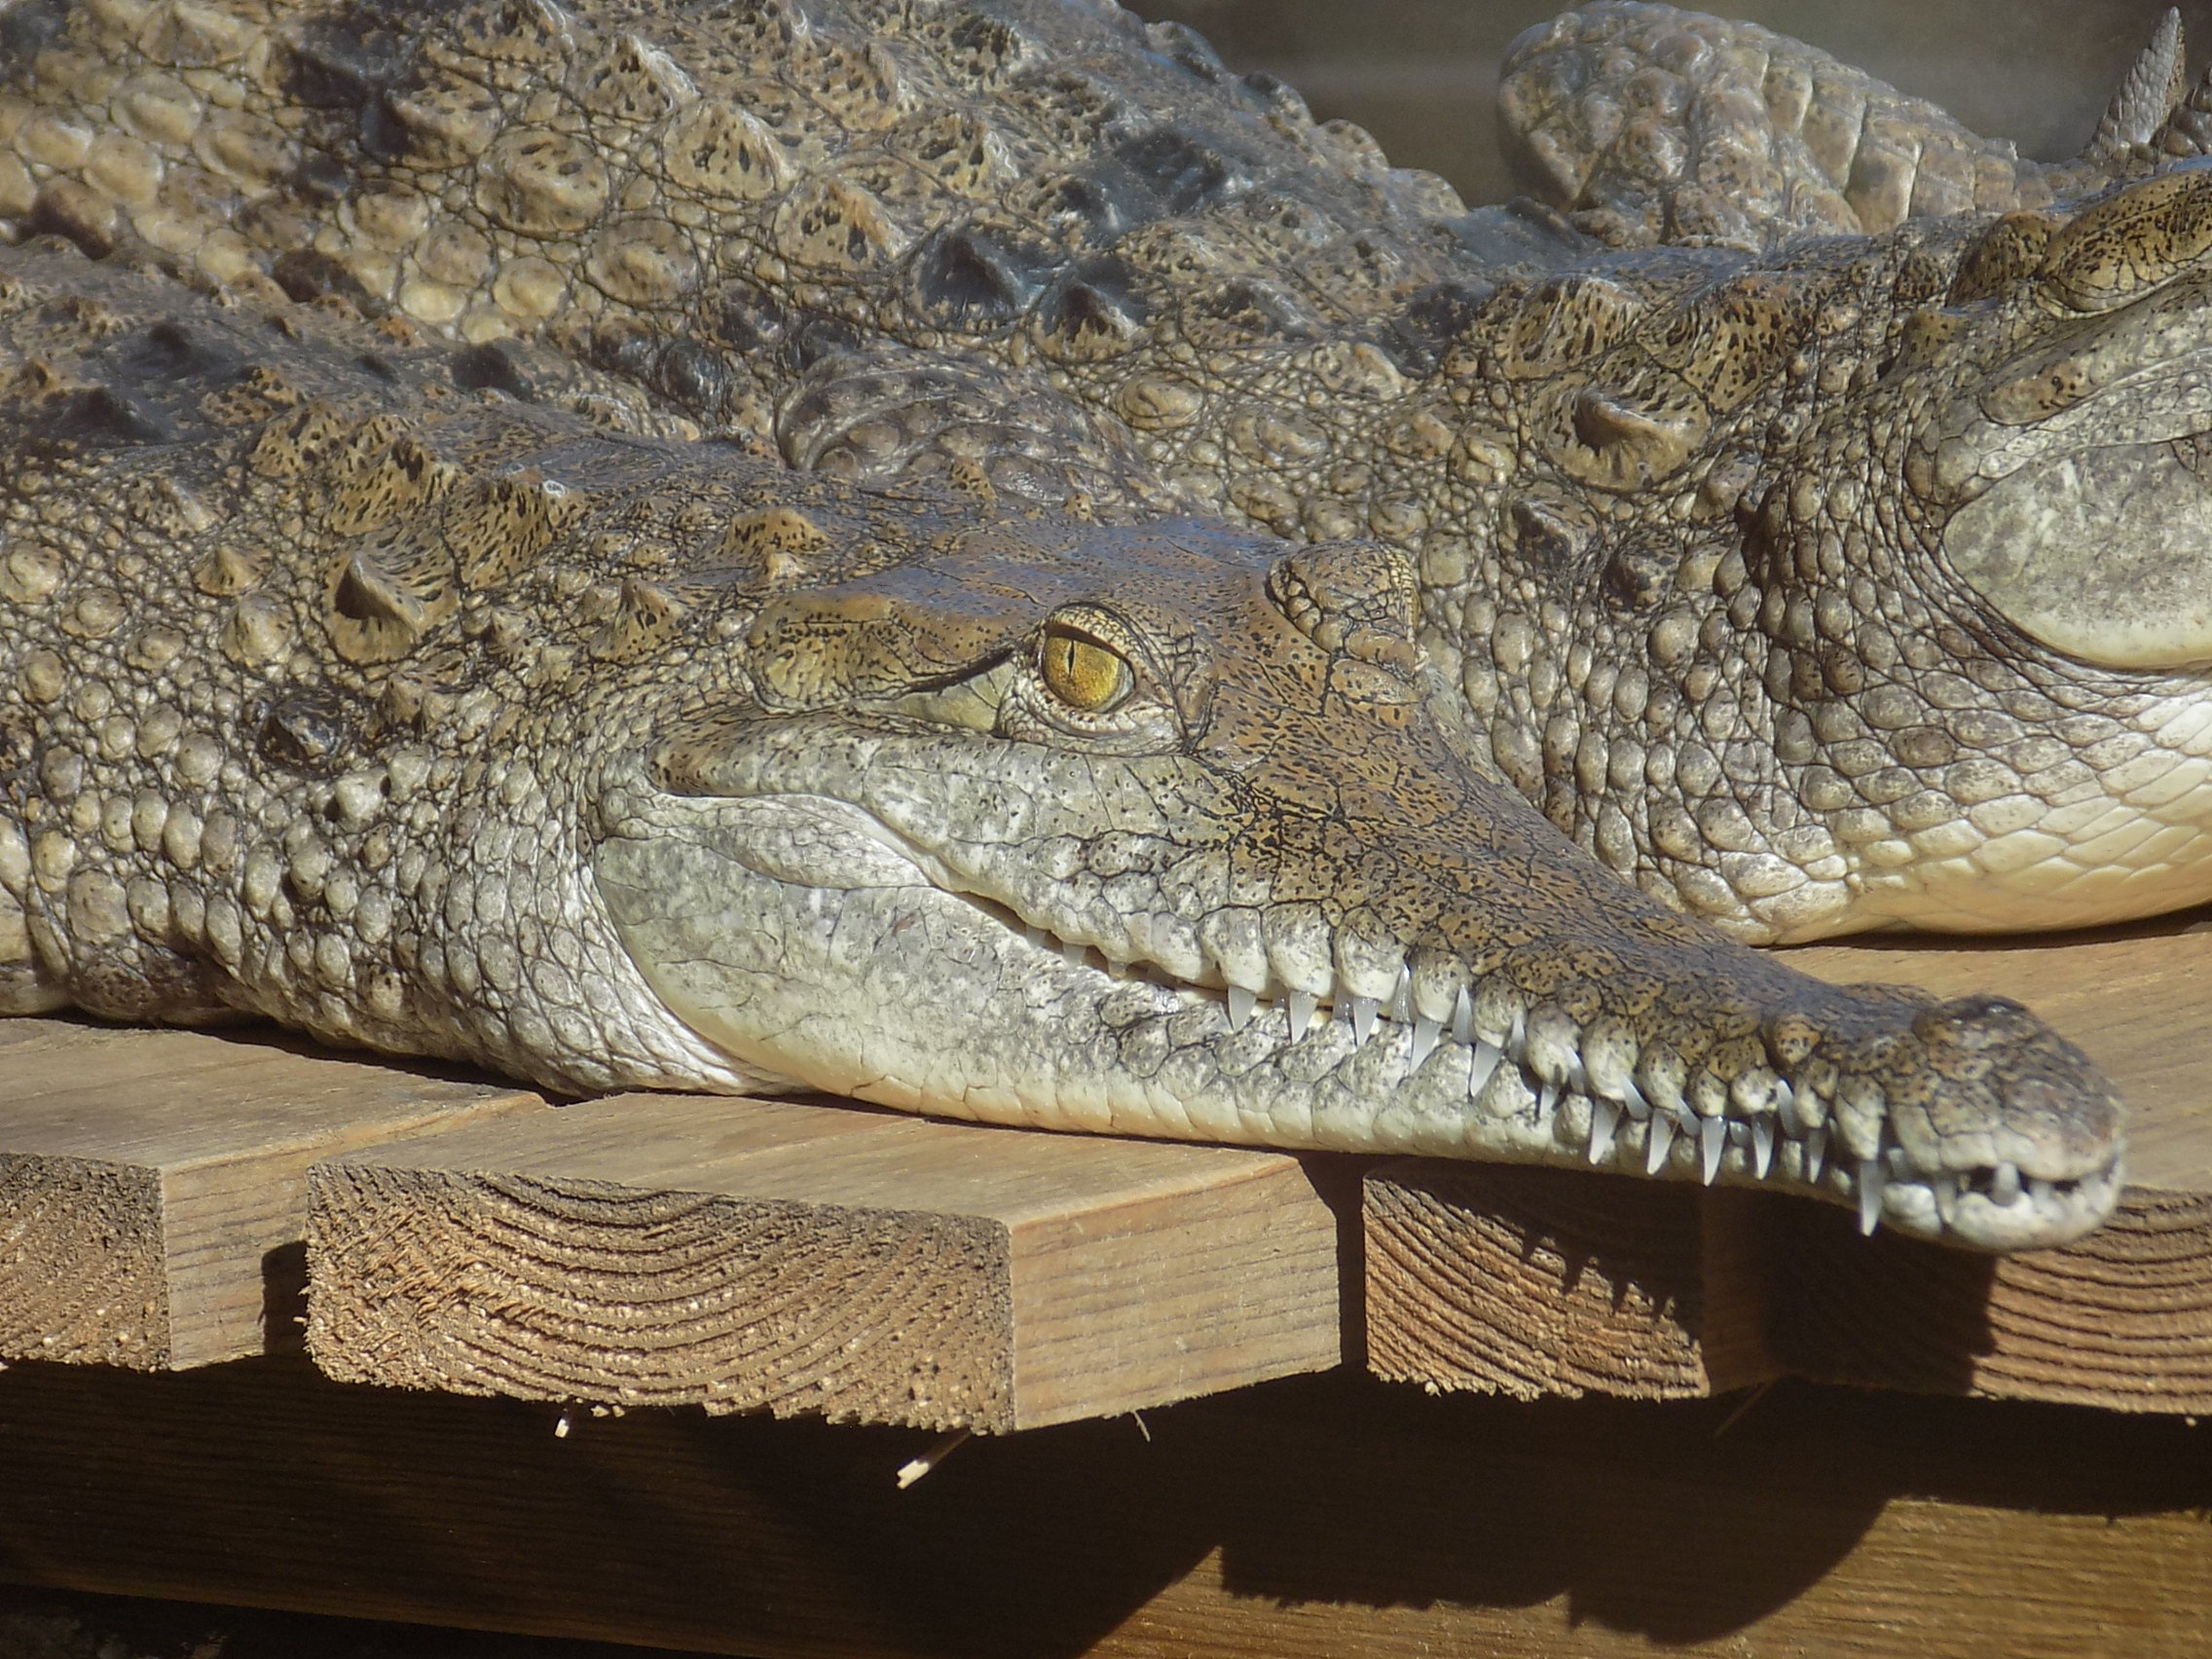 Freshwater Crocodile | Crocodiles Of The World